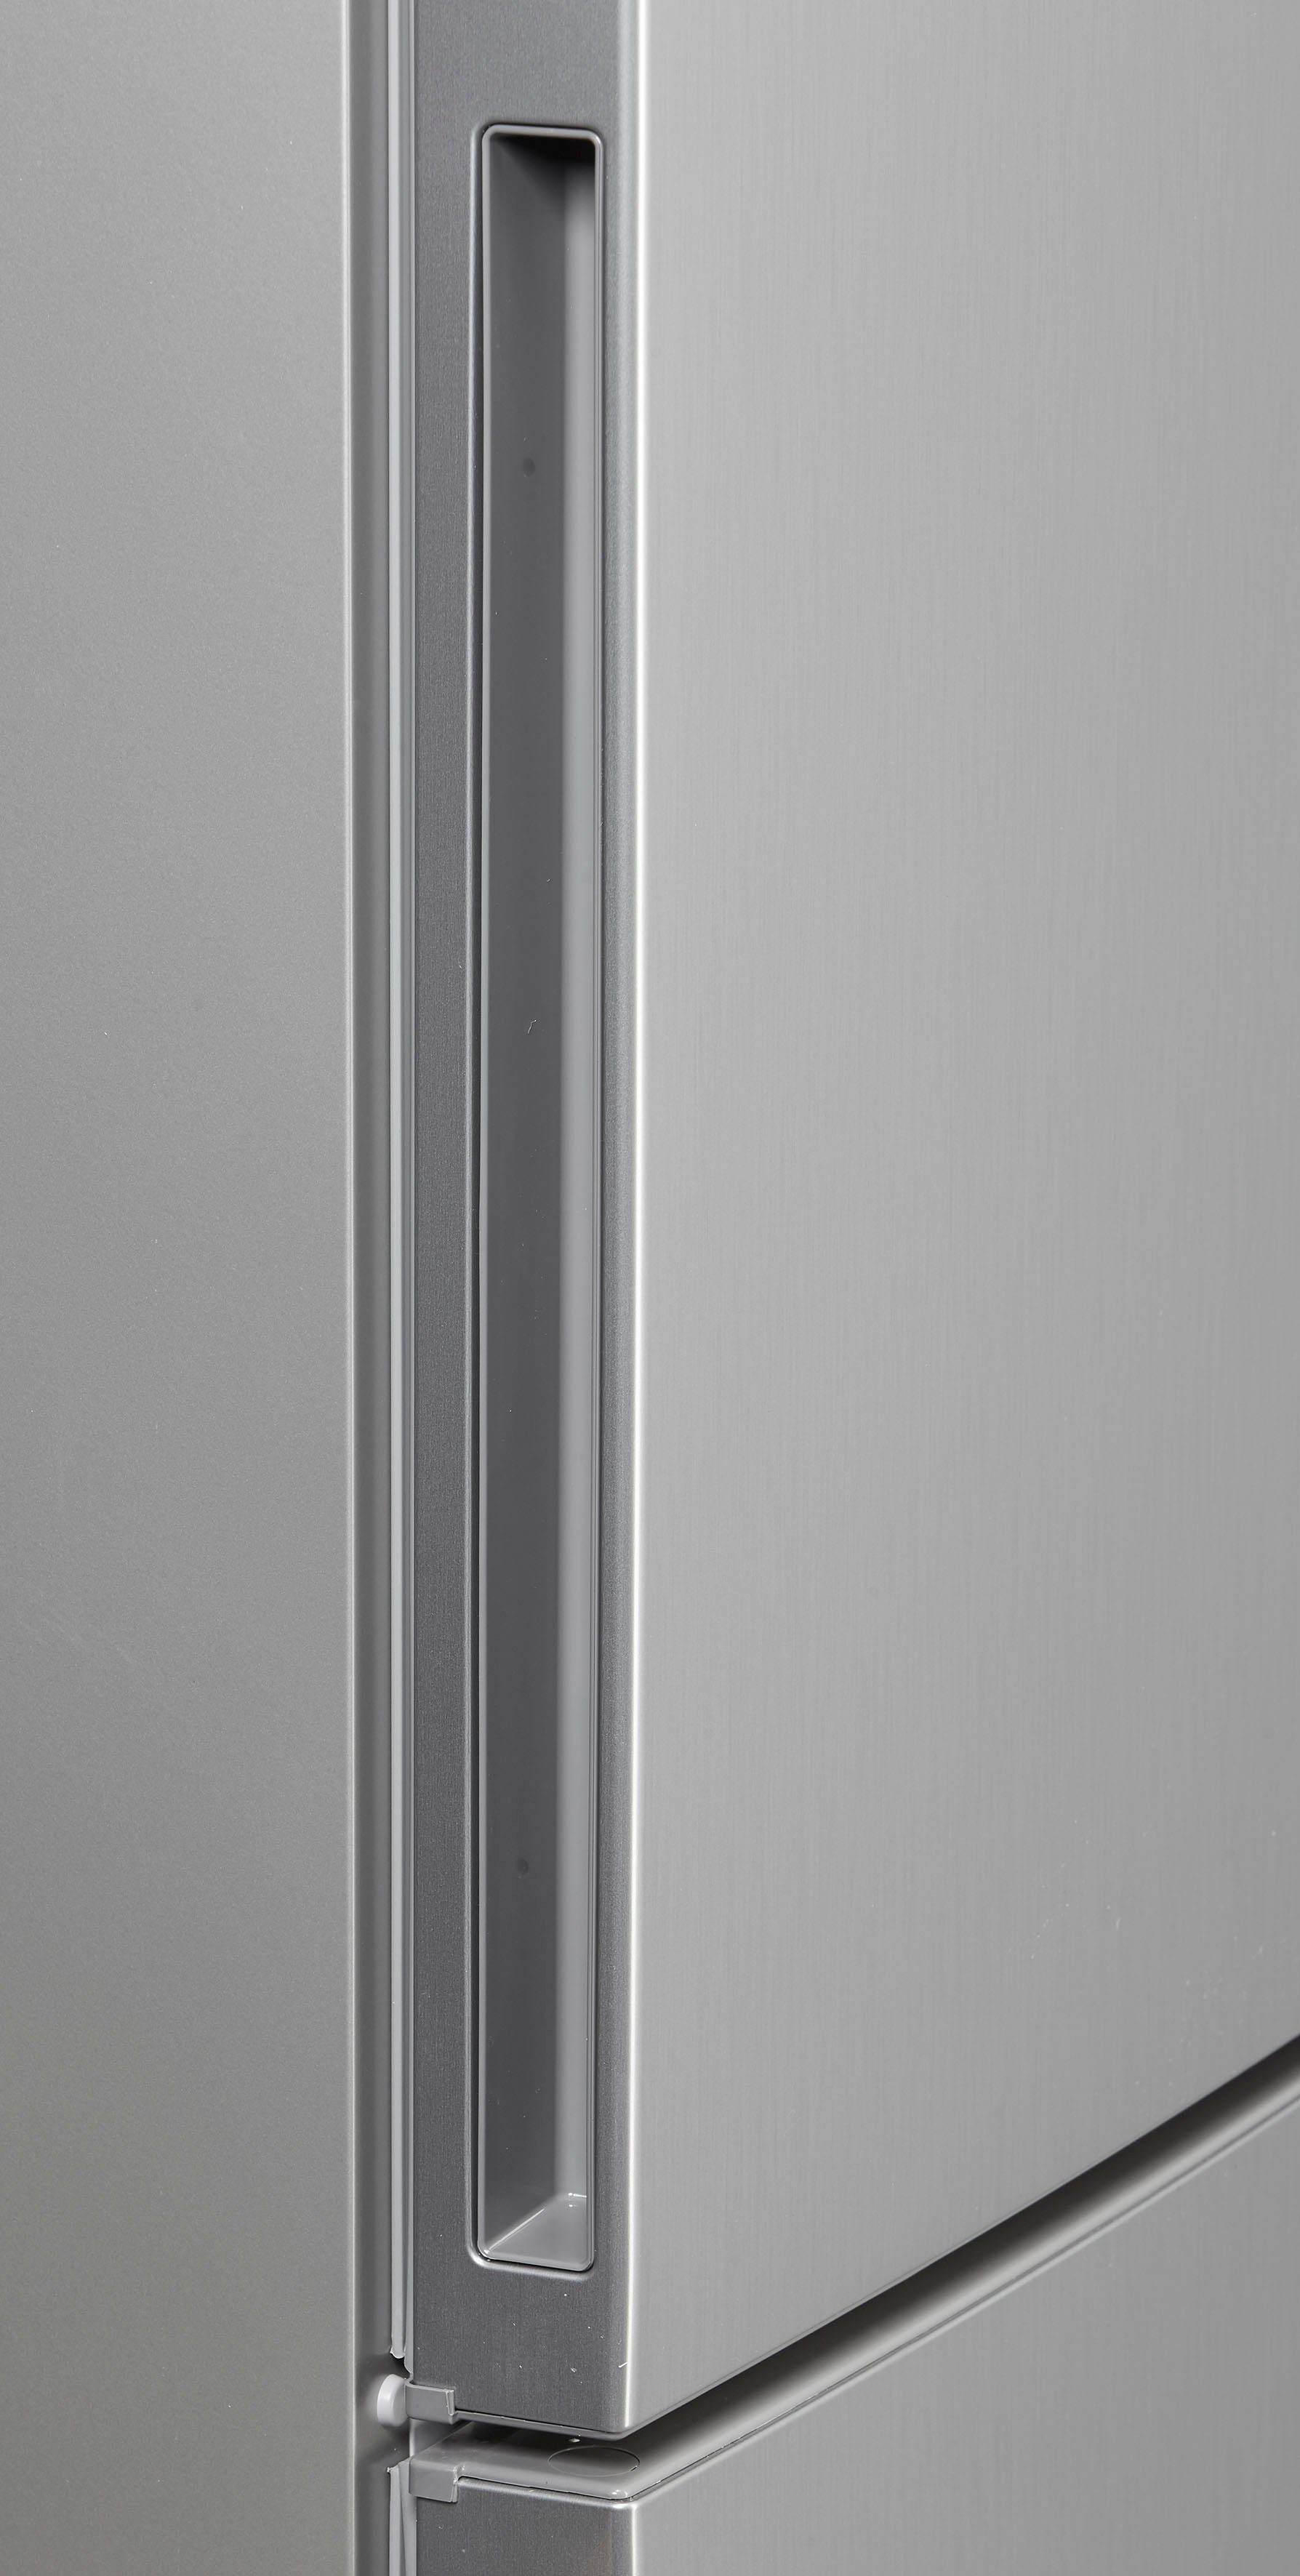 cm 186 KGE36ALCA, Kühl-/Gefrierkombination optik BOSCH hoch, edelstahl cm 60 breit